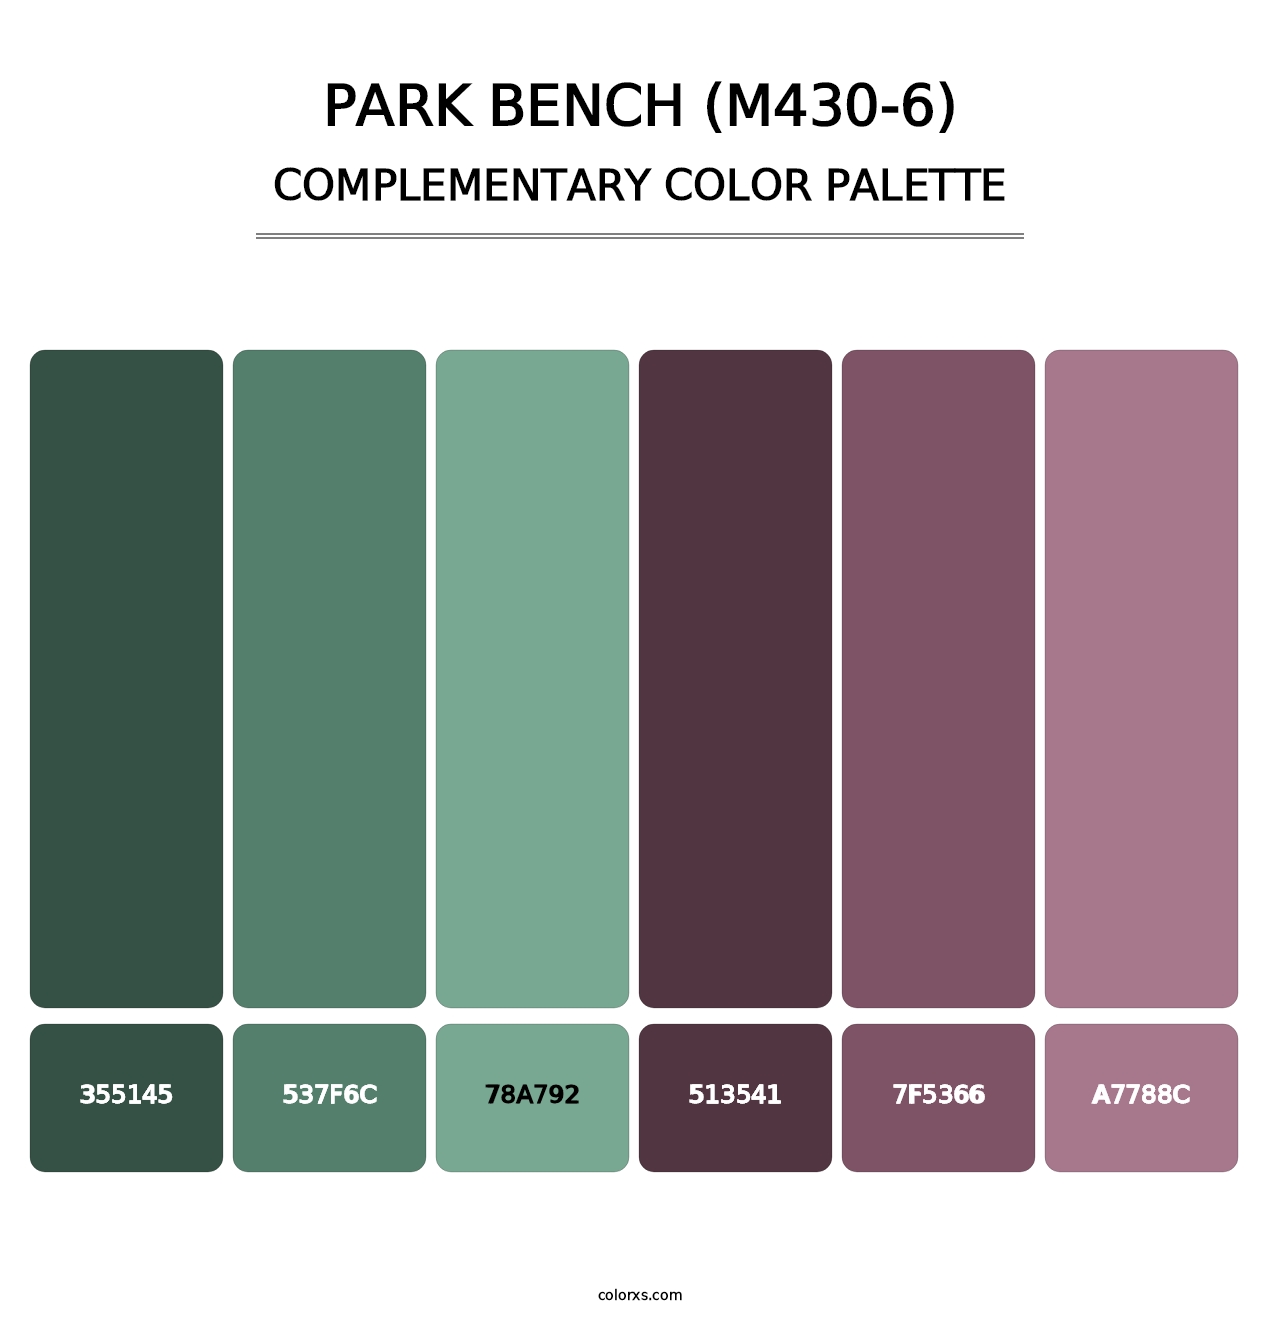 Park Bench (M430-6) - Complementary Color Palette